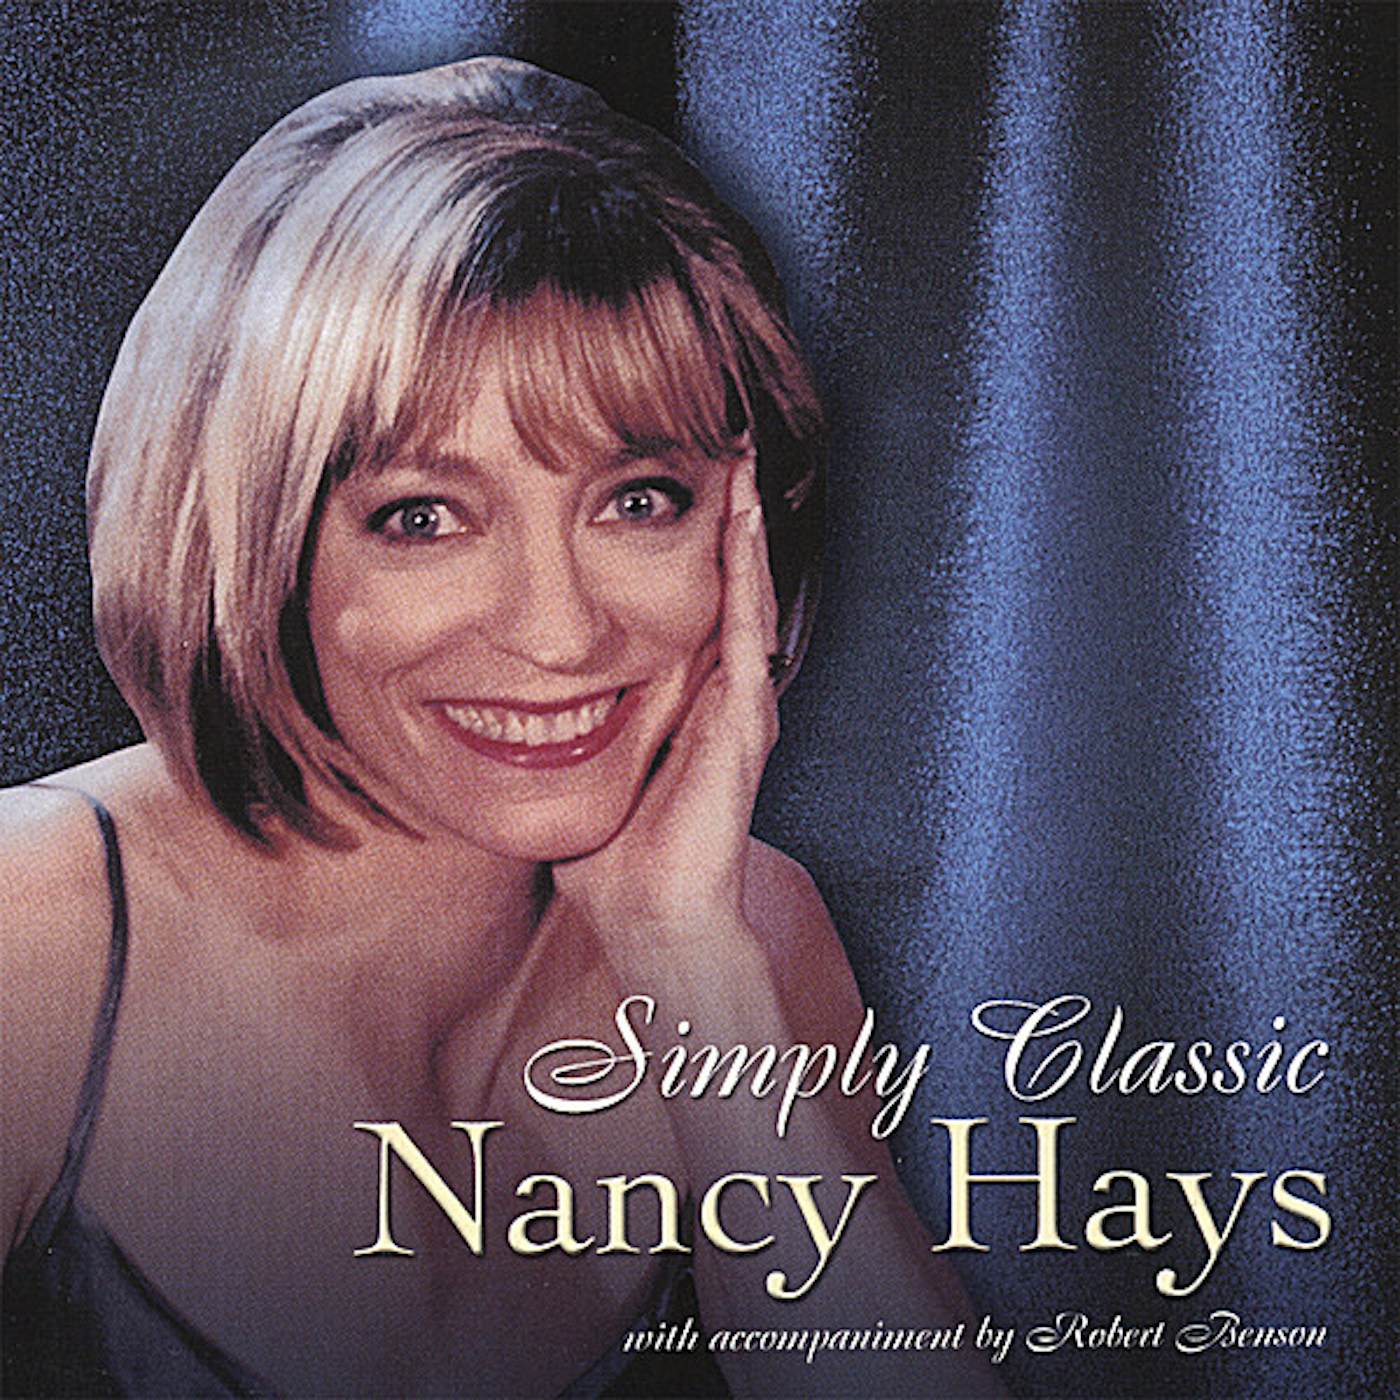 Nancy Hays SIMPLY CLASSIC CD